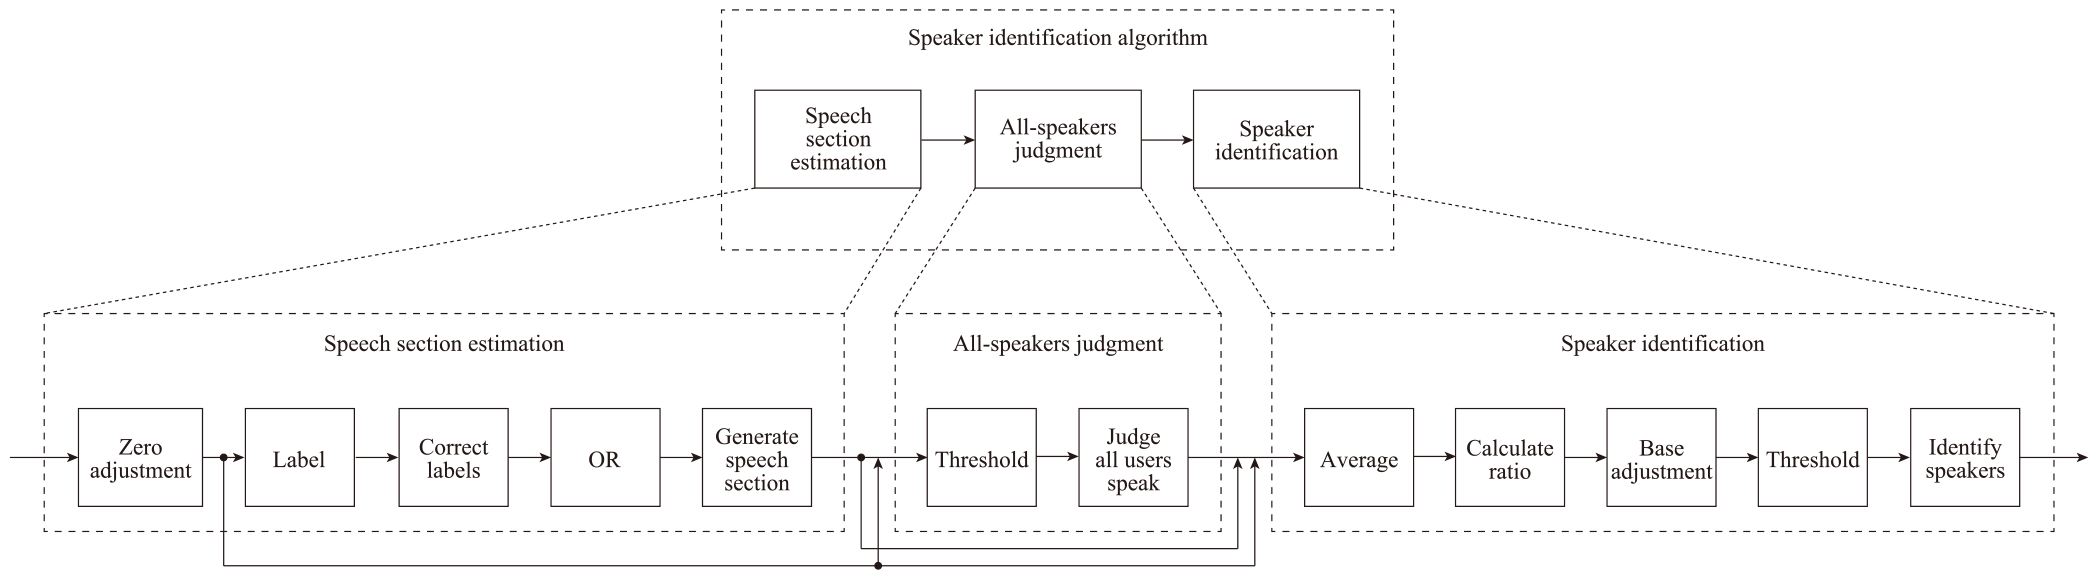 Overview of the speaker identification algorithm.